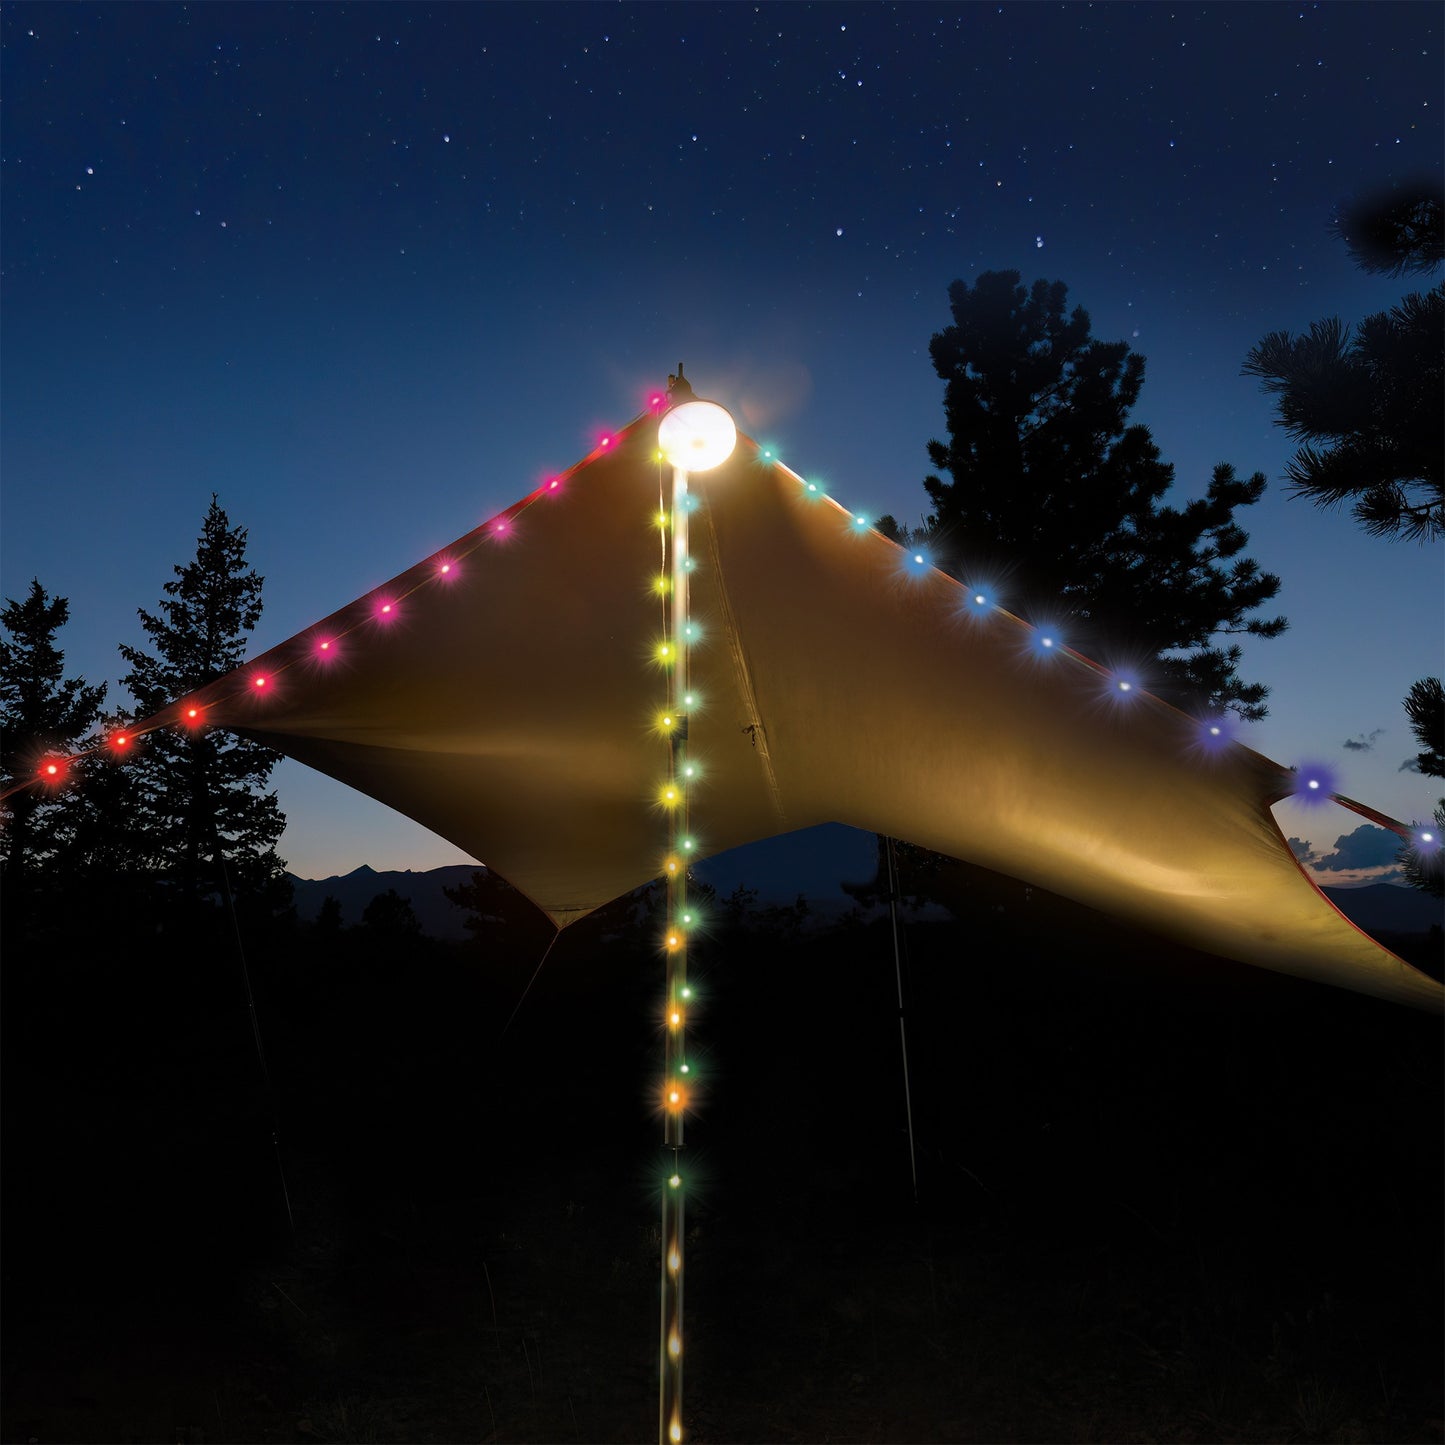 Nite Ize Radiant StarLit Rechargeable Lantern + String Light - Disc-O Select - 15-12722